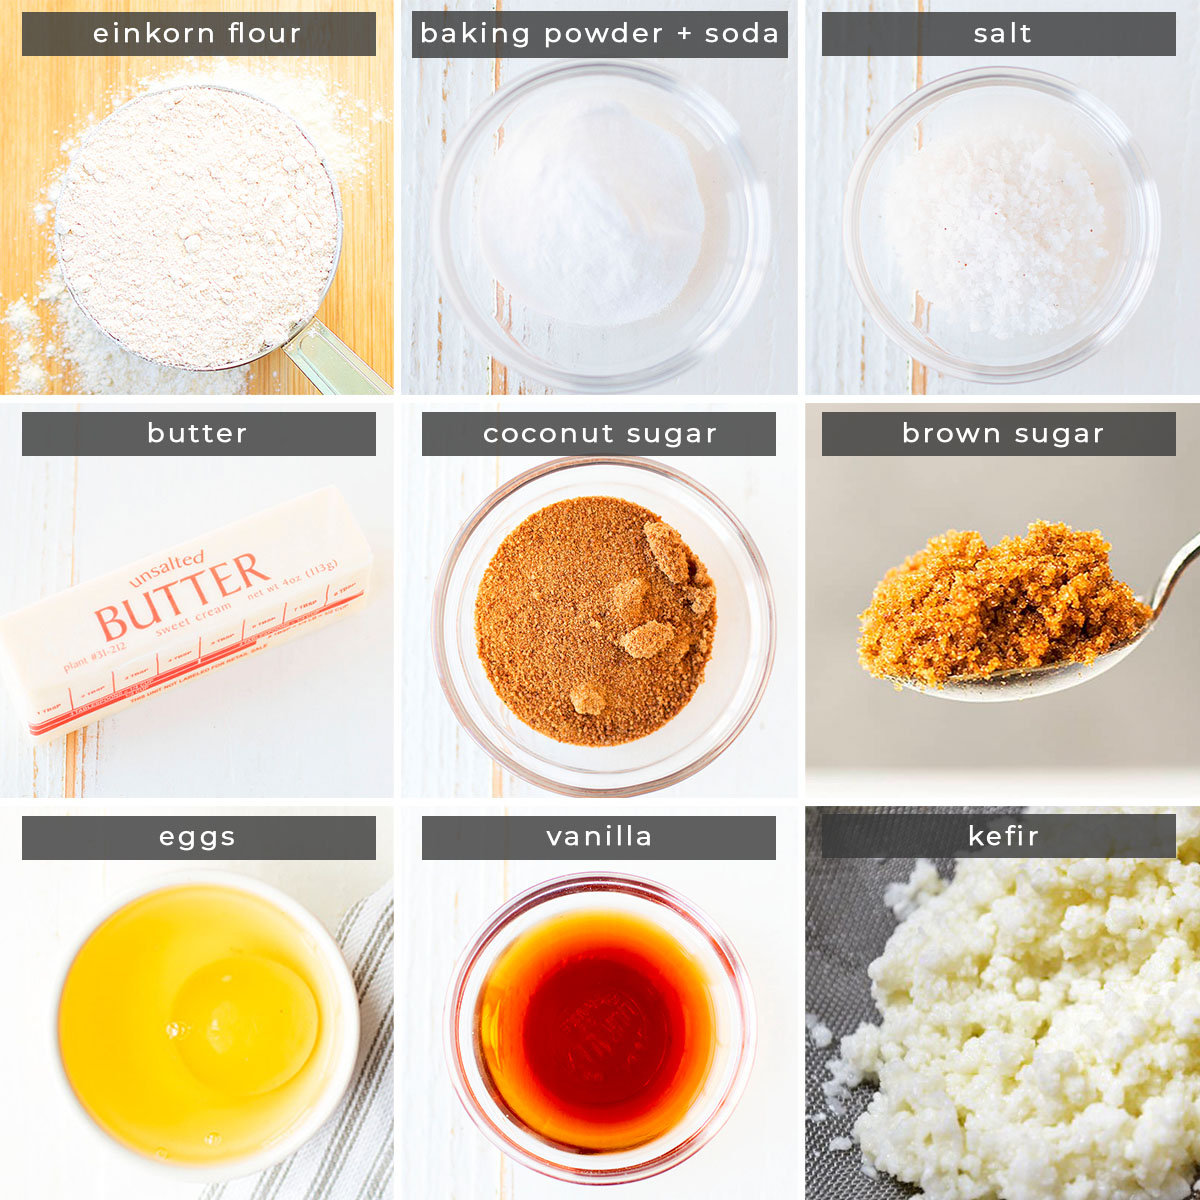 Image showing recipe ingredients flour, baking powder + soda, salt, butter, coconut sugar, brown sugar, eggs, vanilla, and kefir.